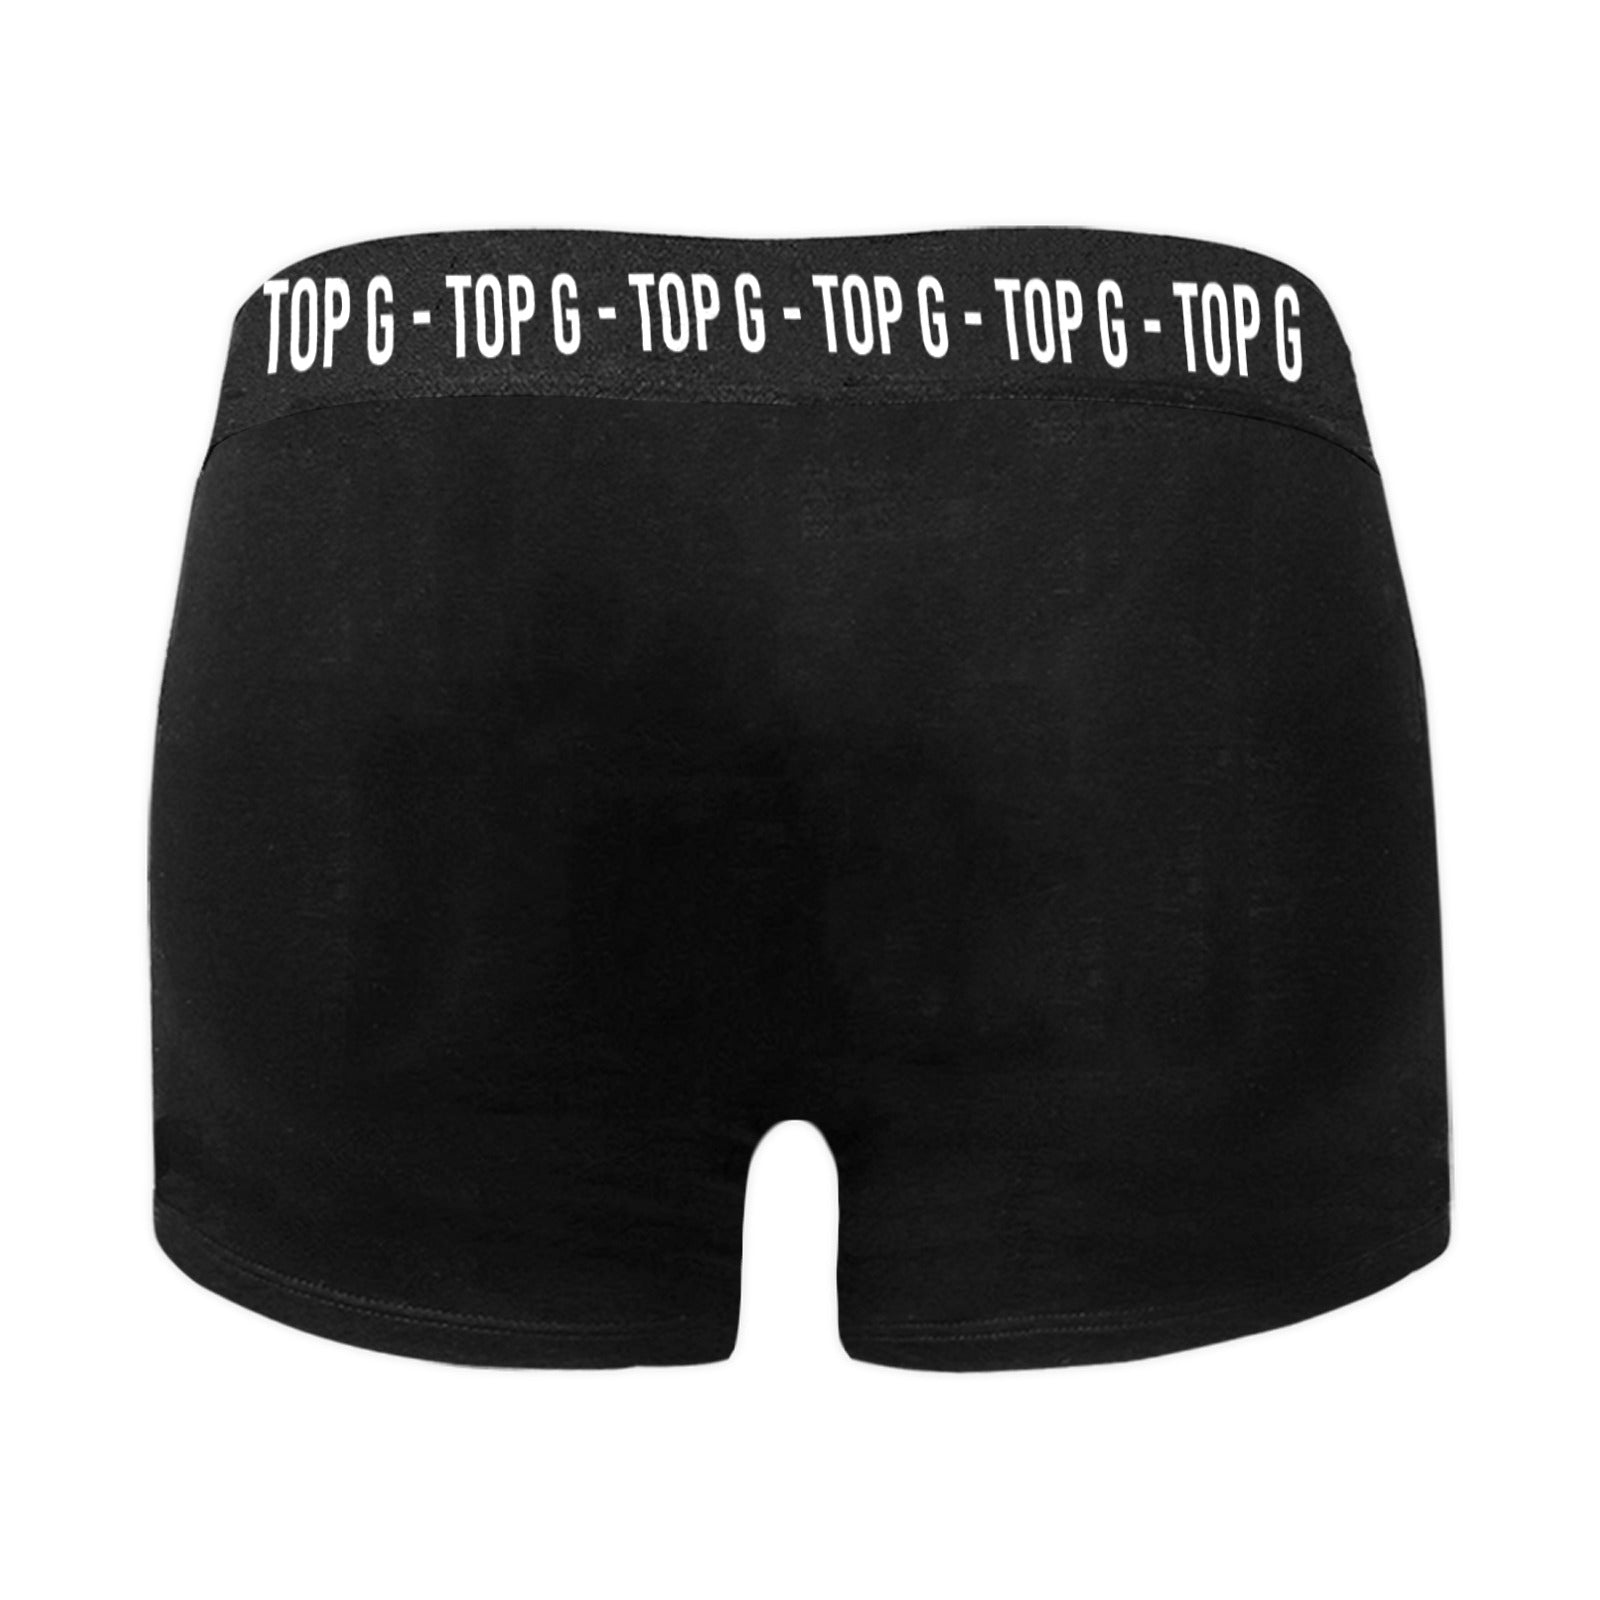 Men's Underwear TOP G — WEAR